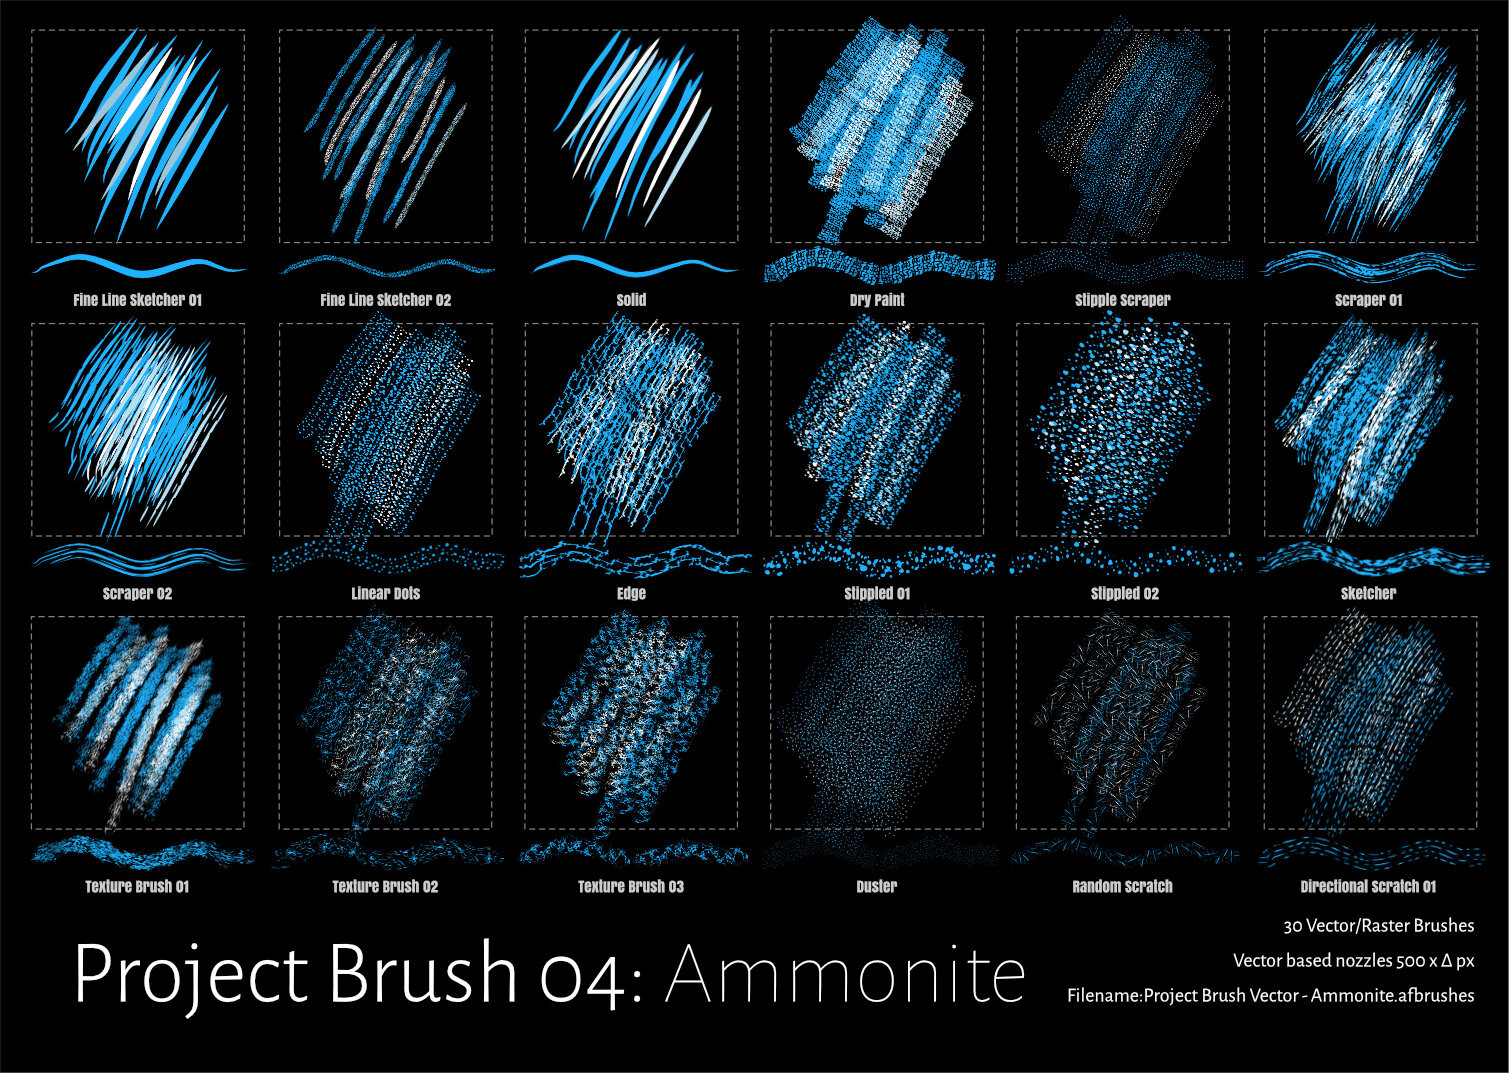 Project Brush 04:Ammonite Part I
30 Vector Brushes